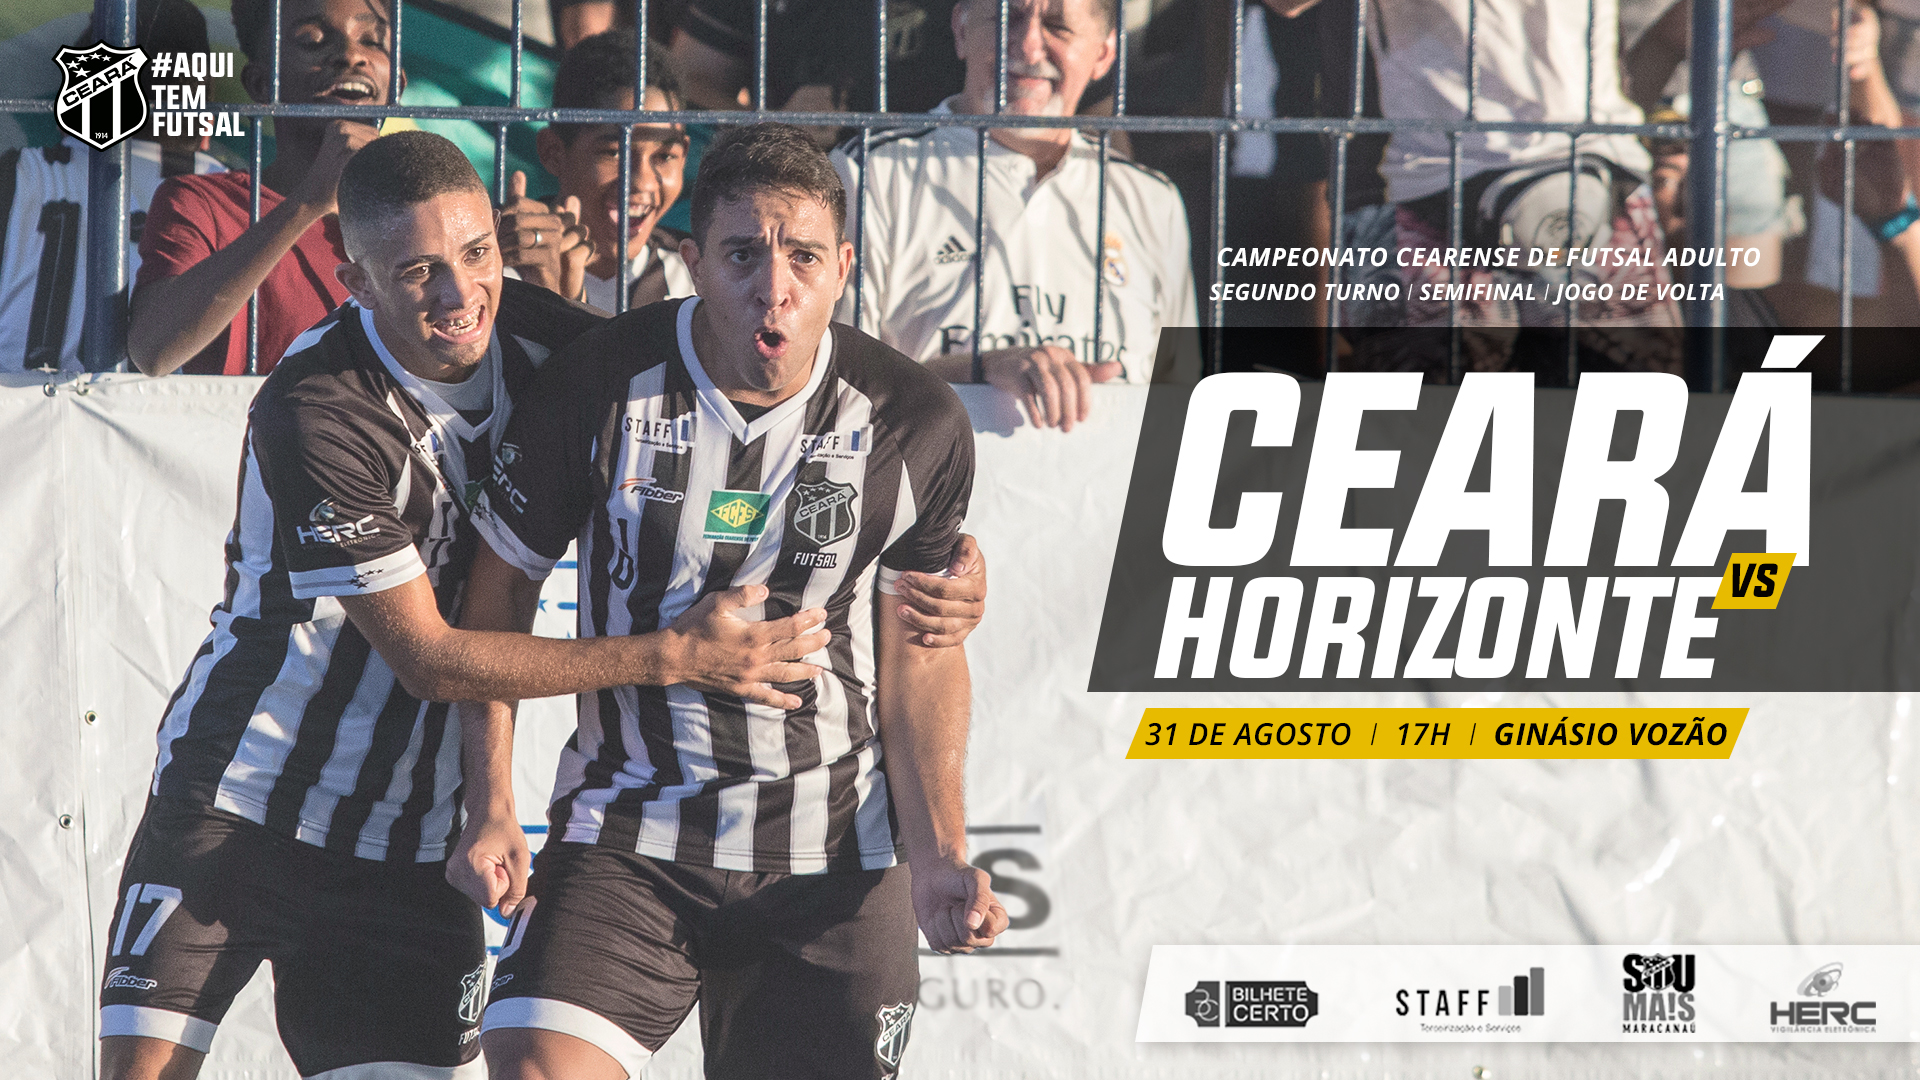 Futsal Adulto: No Ginásio Vozão, Ceará recebe Horizonte e decide vaga na final do segundo turno